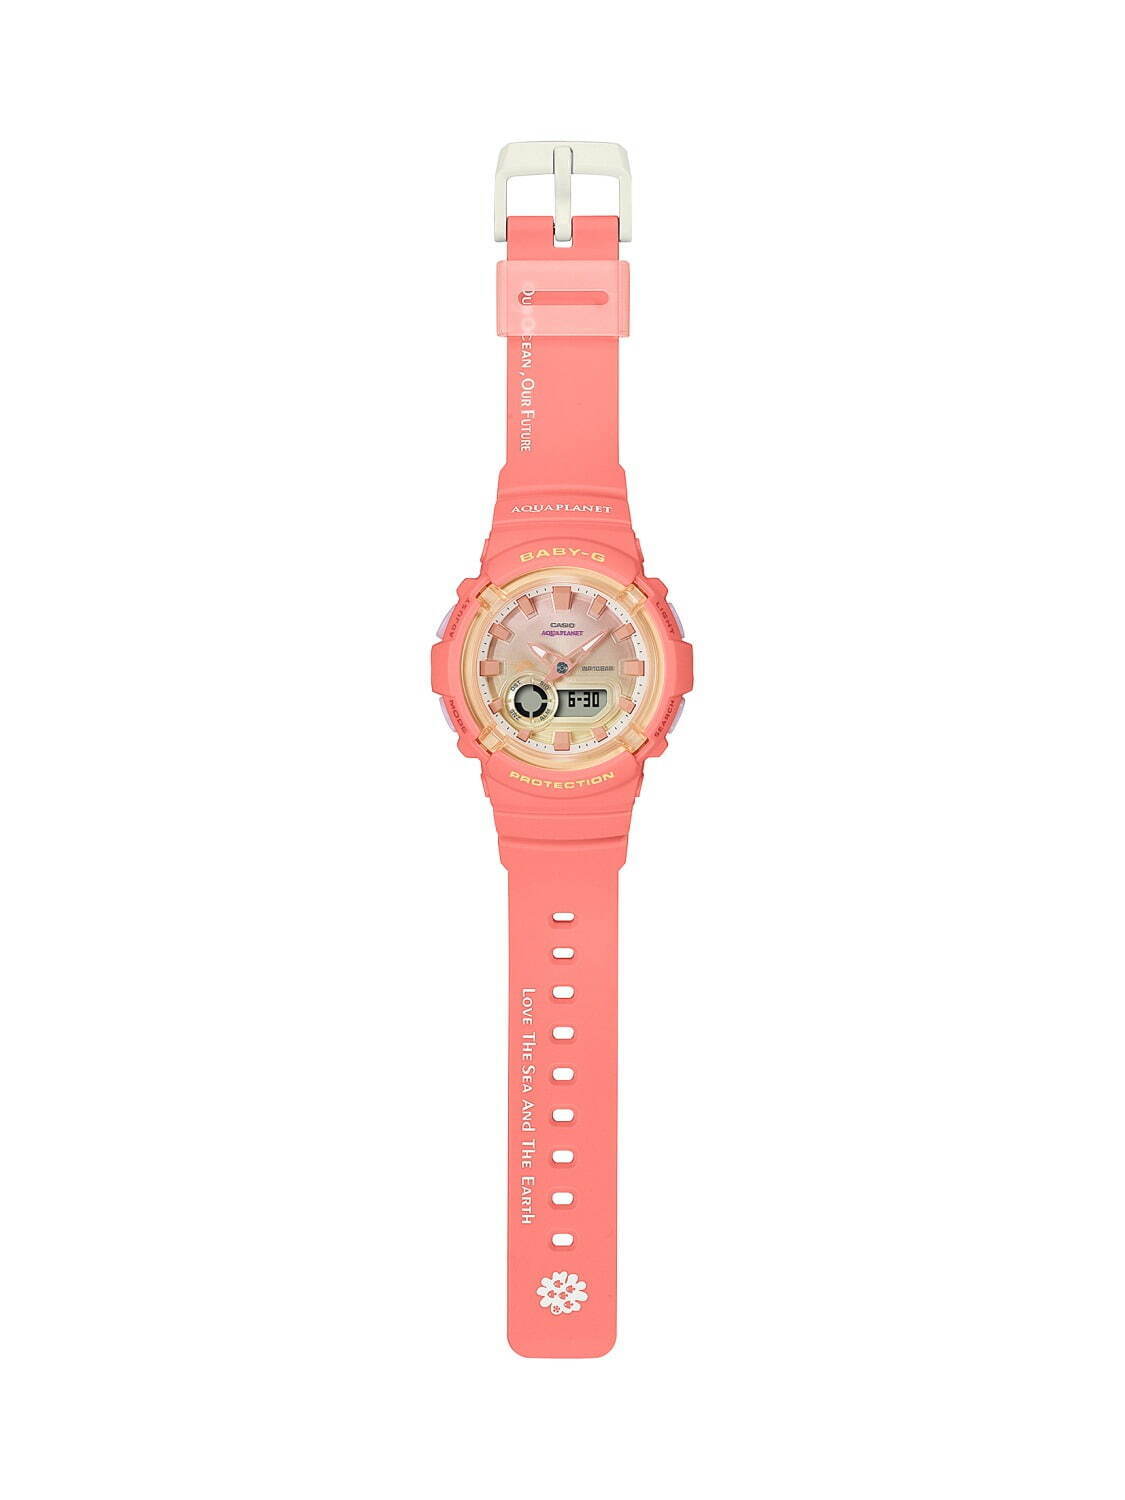 BABY-G“サンゴ”モチーフの新作腕時計、コーラルオレンジのケース ...